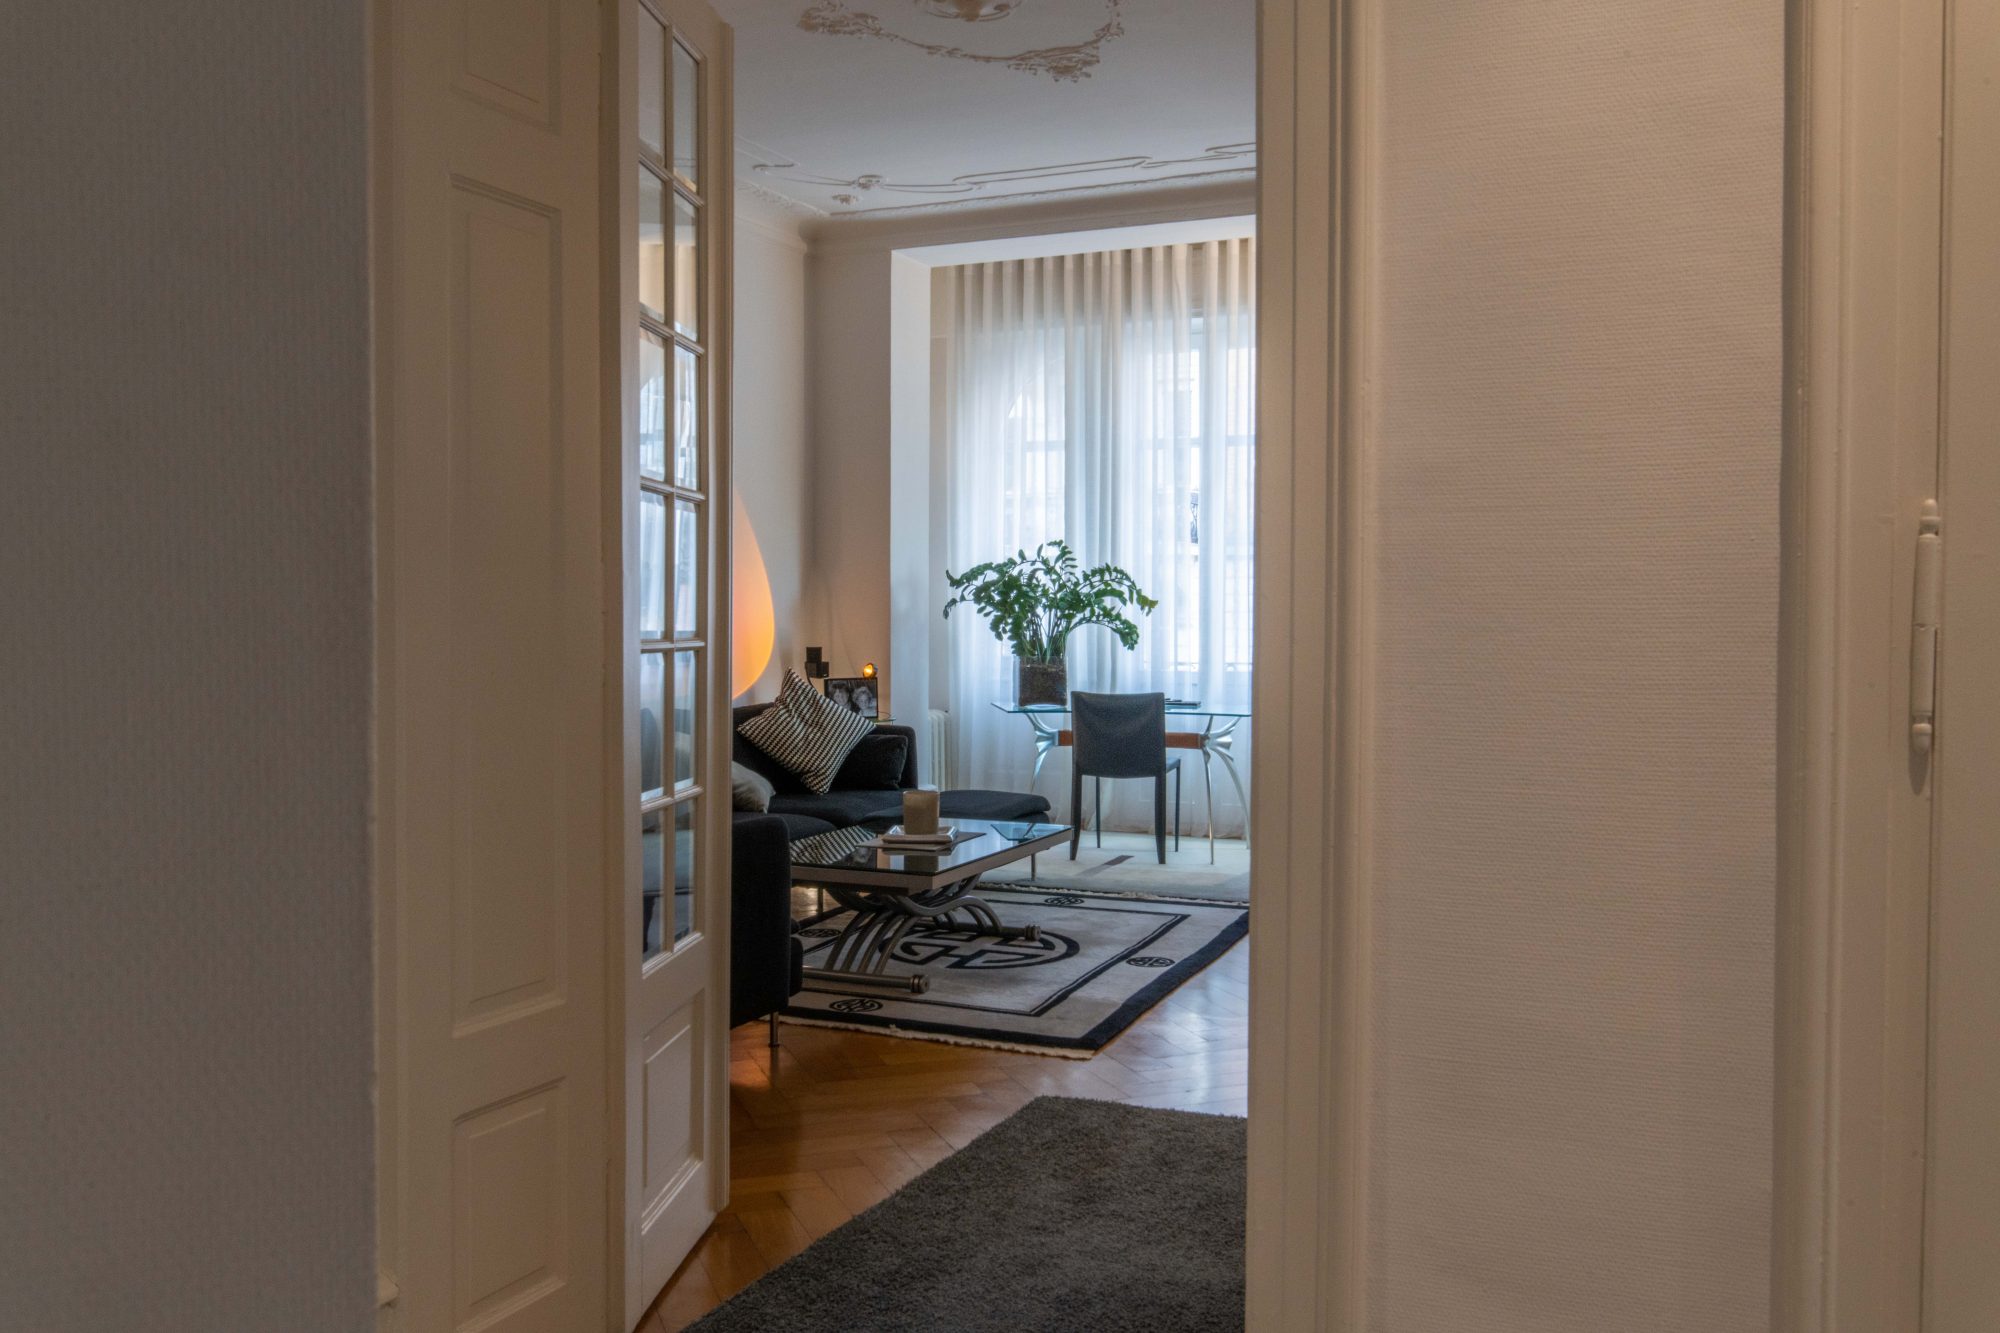 4 pièces avec terrasse - achat appartement Strasbourg - Bintz Immobilier - 2